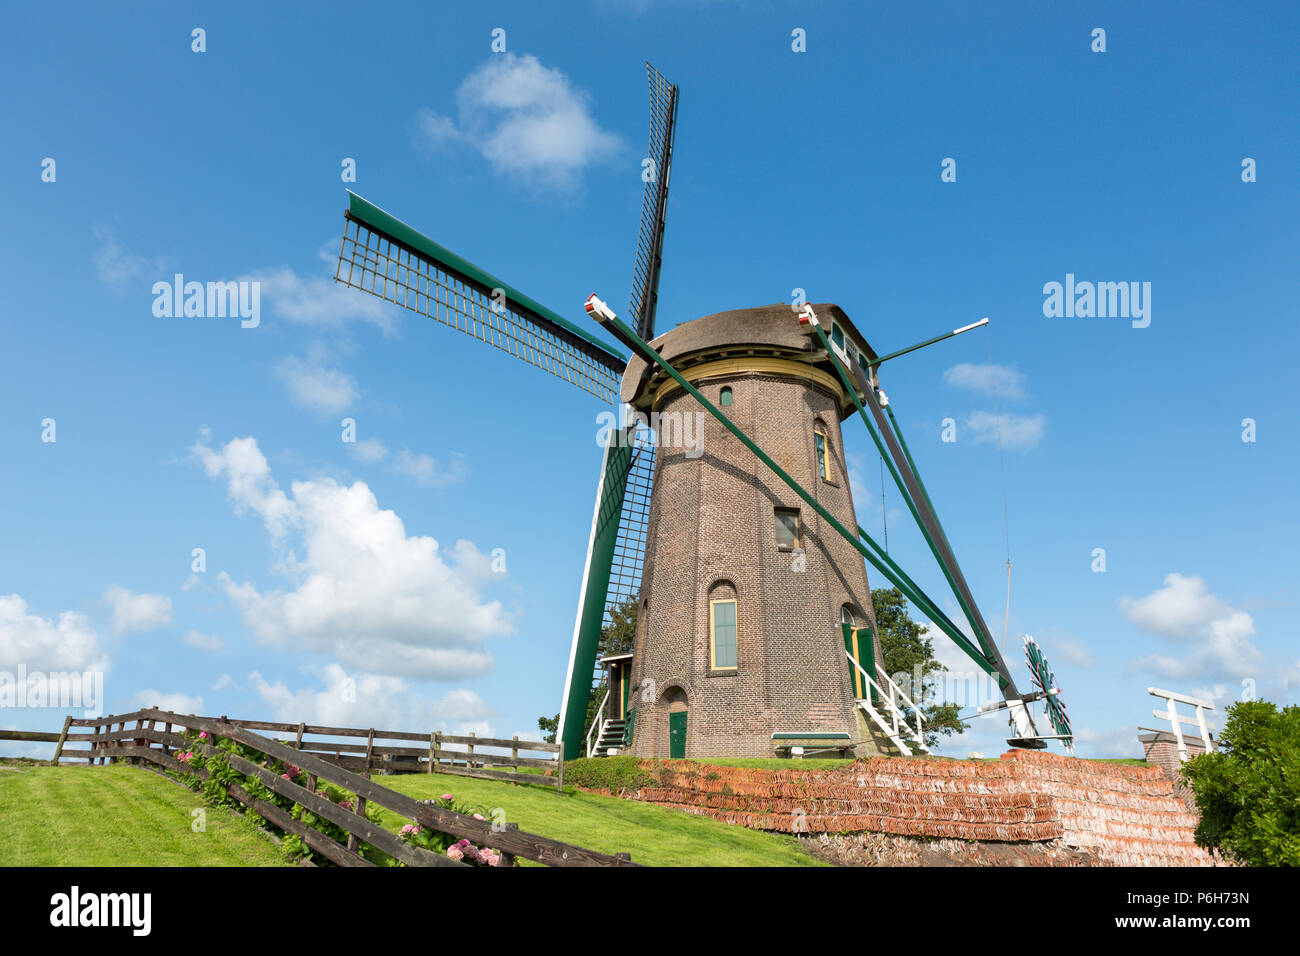 The dutch historic windmill 'Lijkermolen' on a dyke in the blue sky of the village of Rijpwetering. Stock Photo